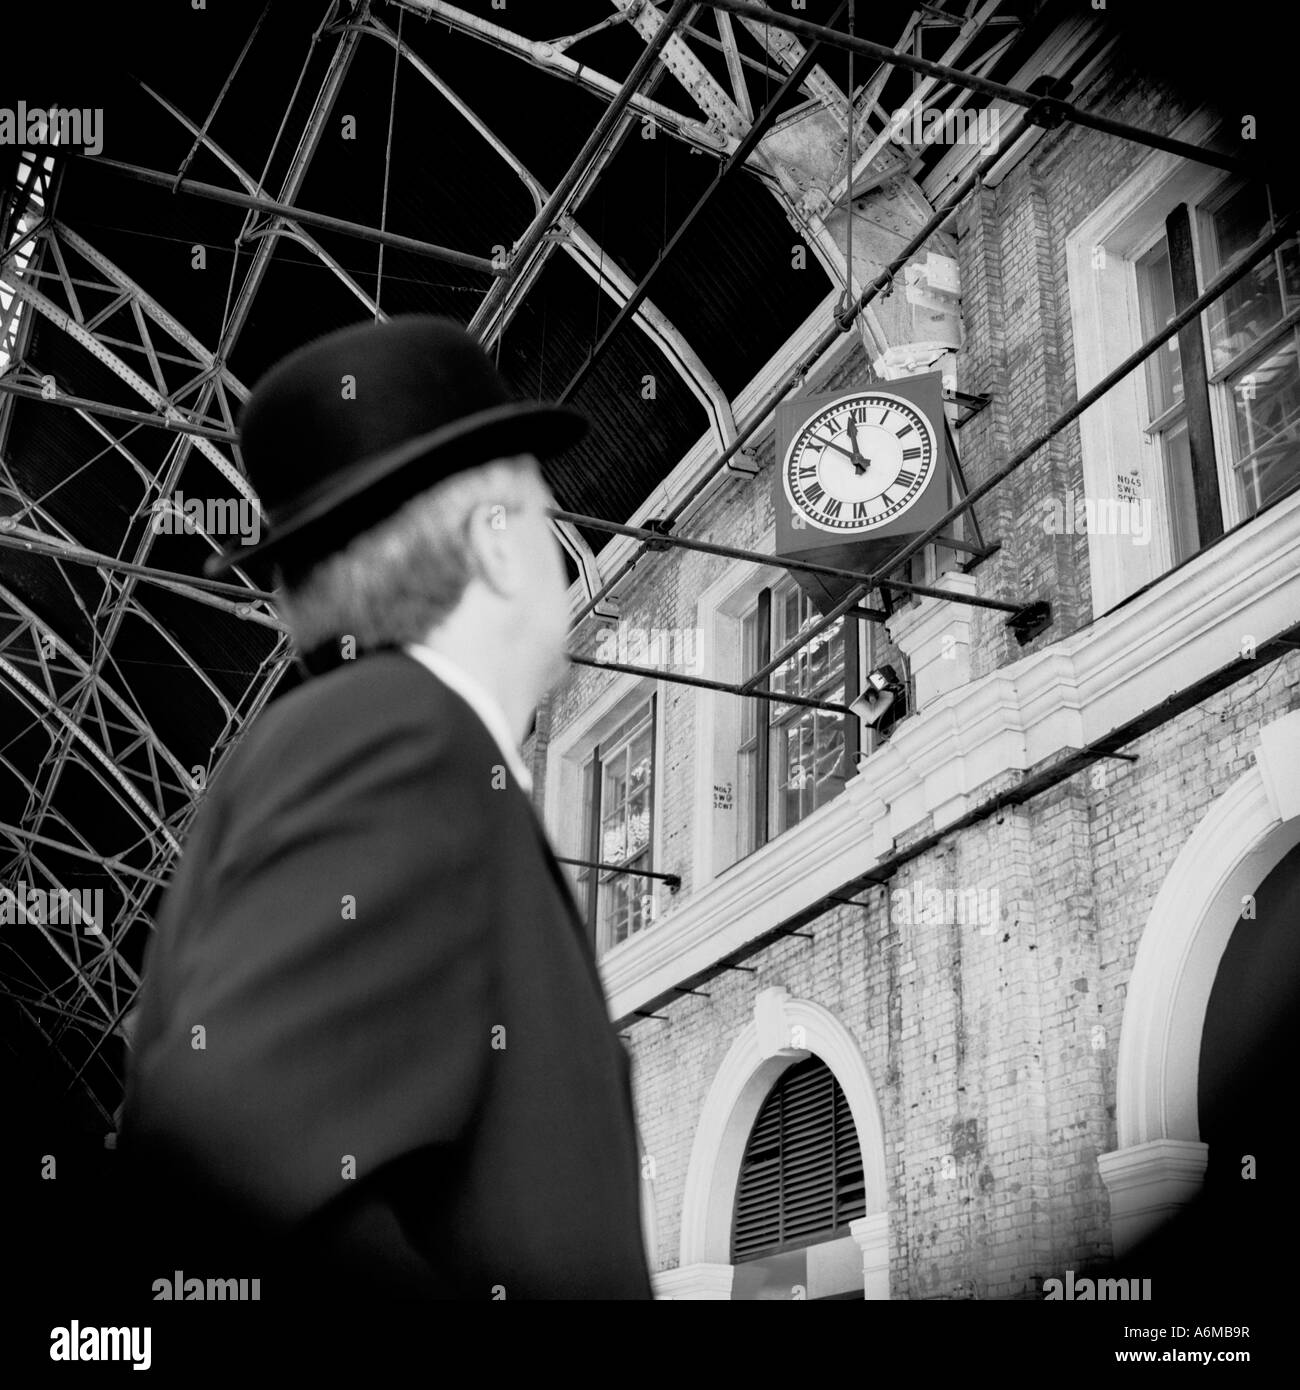 British businessman in bowler hat looking at clock at railway station Stock Photo